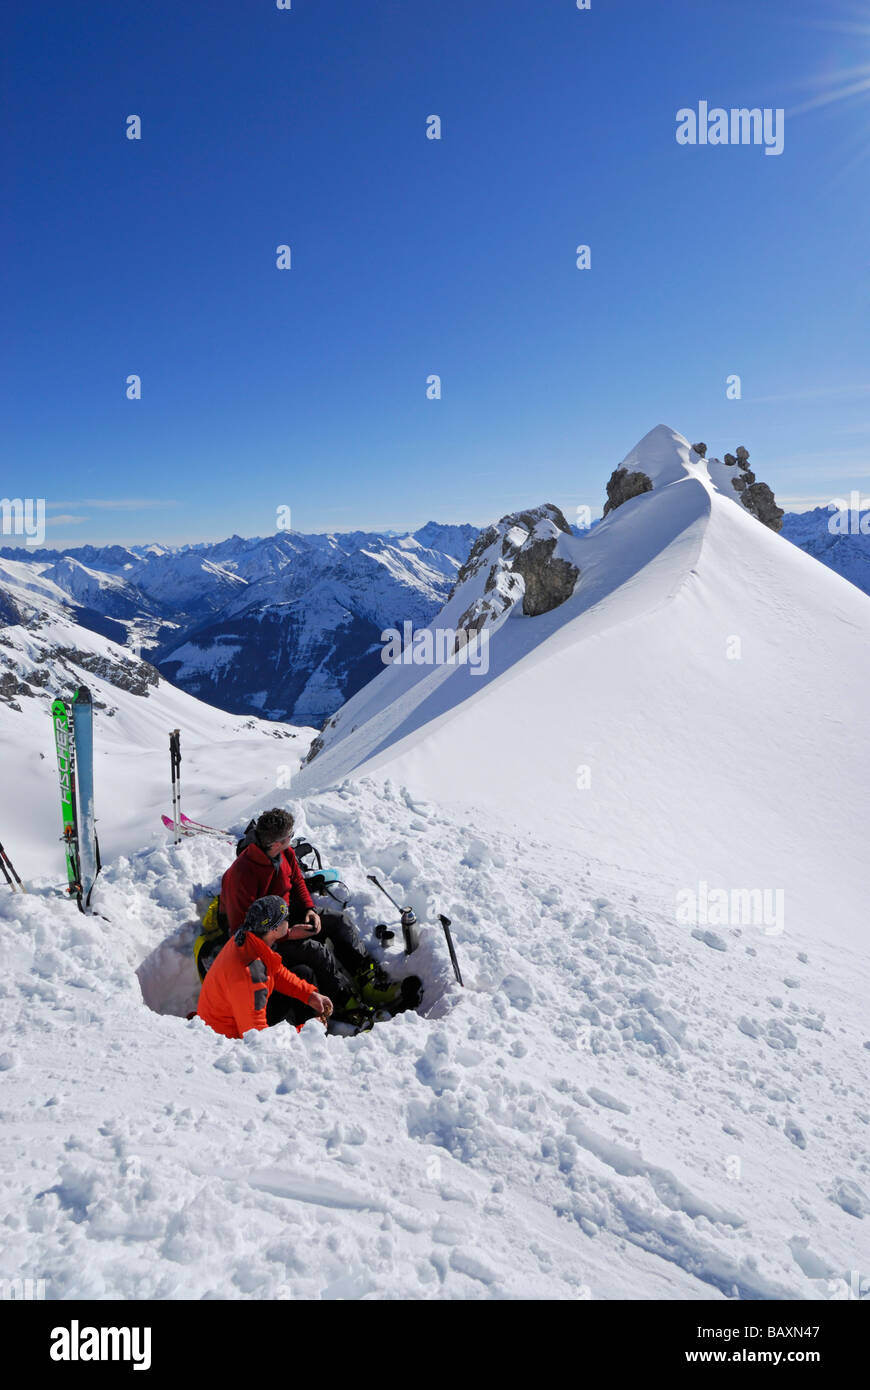 two backcountry skiers resting in snow pit, Woleggleskarspitze, Allgaeu range, Allgaeu, Tyrol, Austria Stock Photo